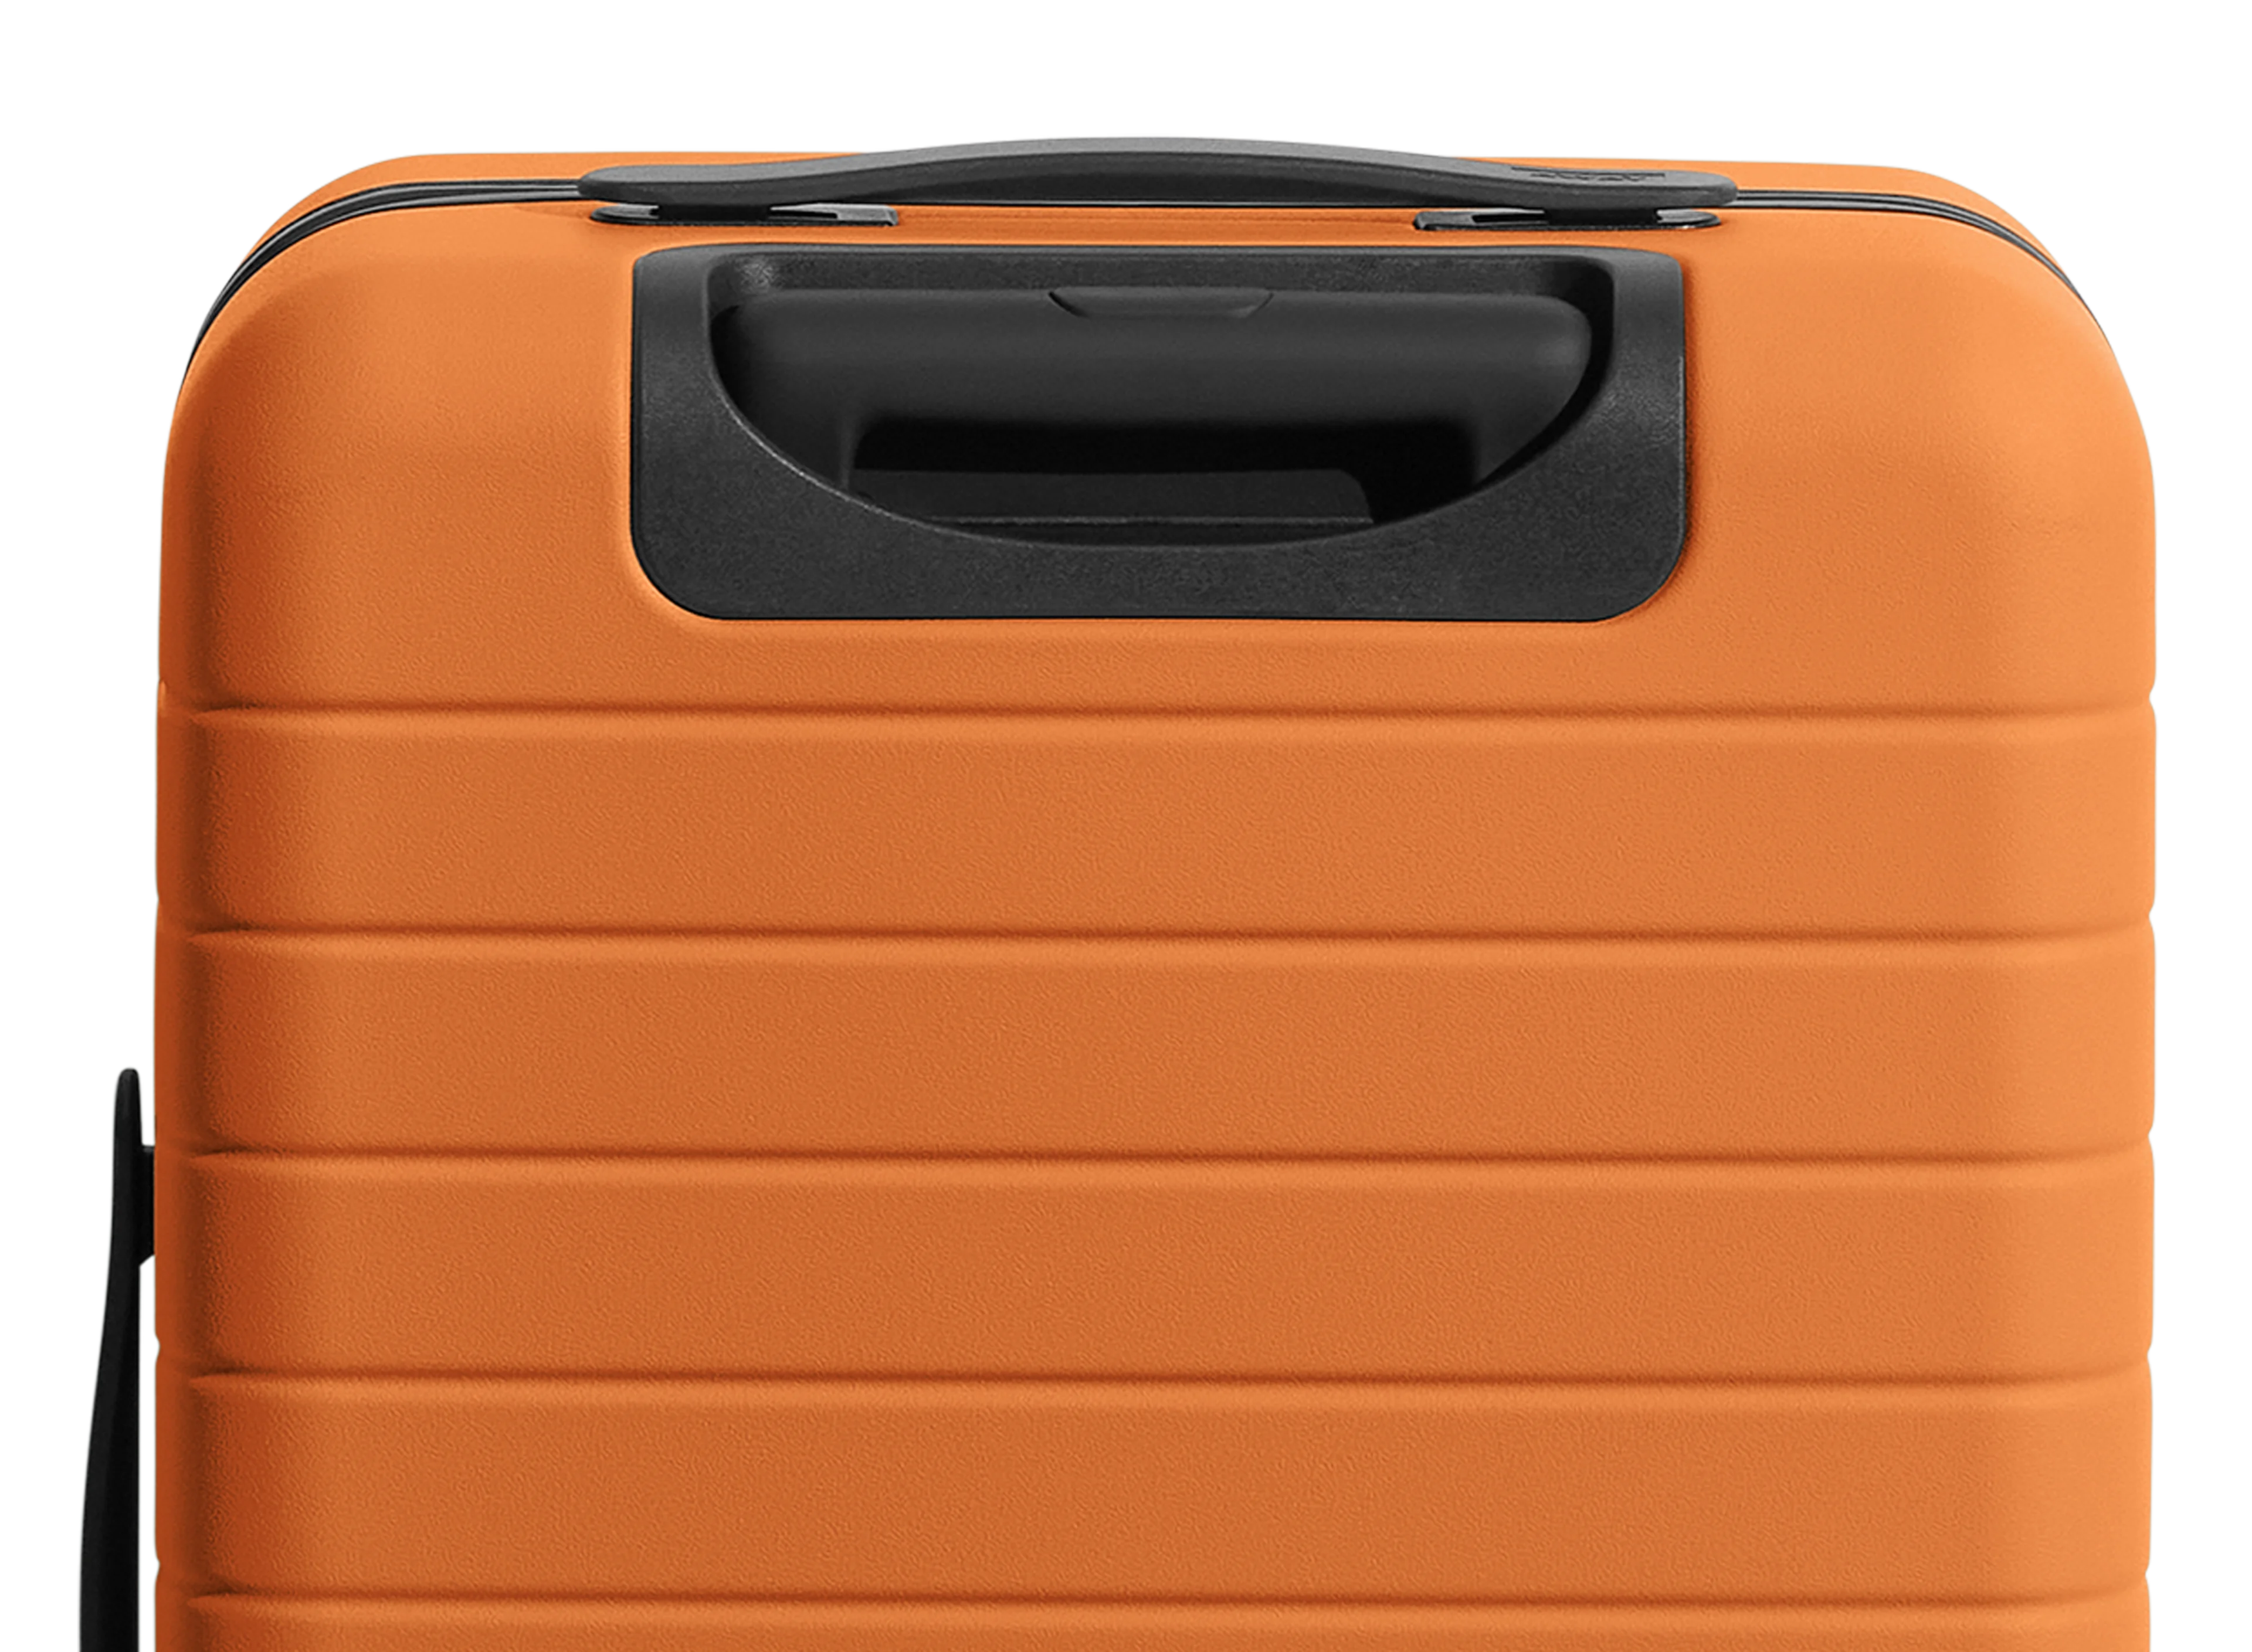 The Bigger Carry-On in Sorbet Orange